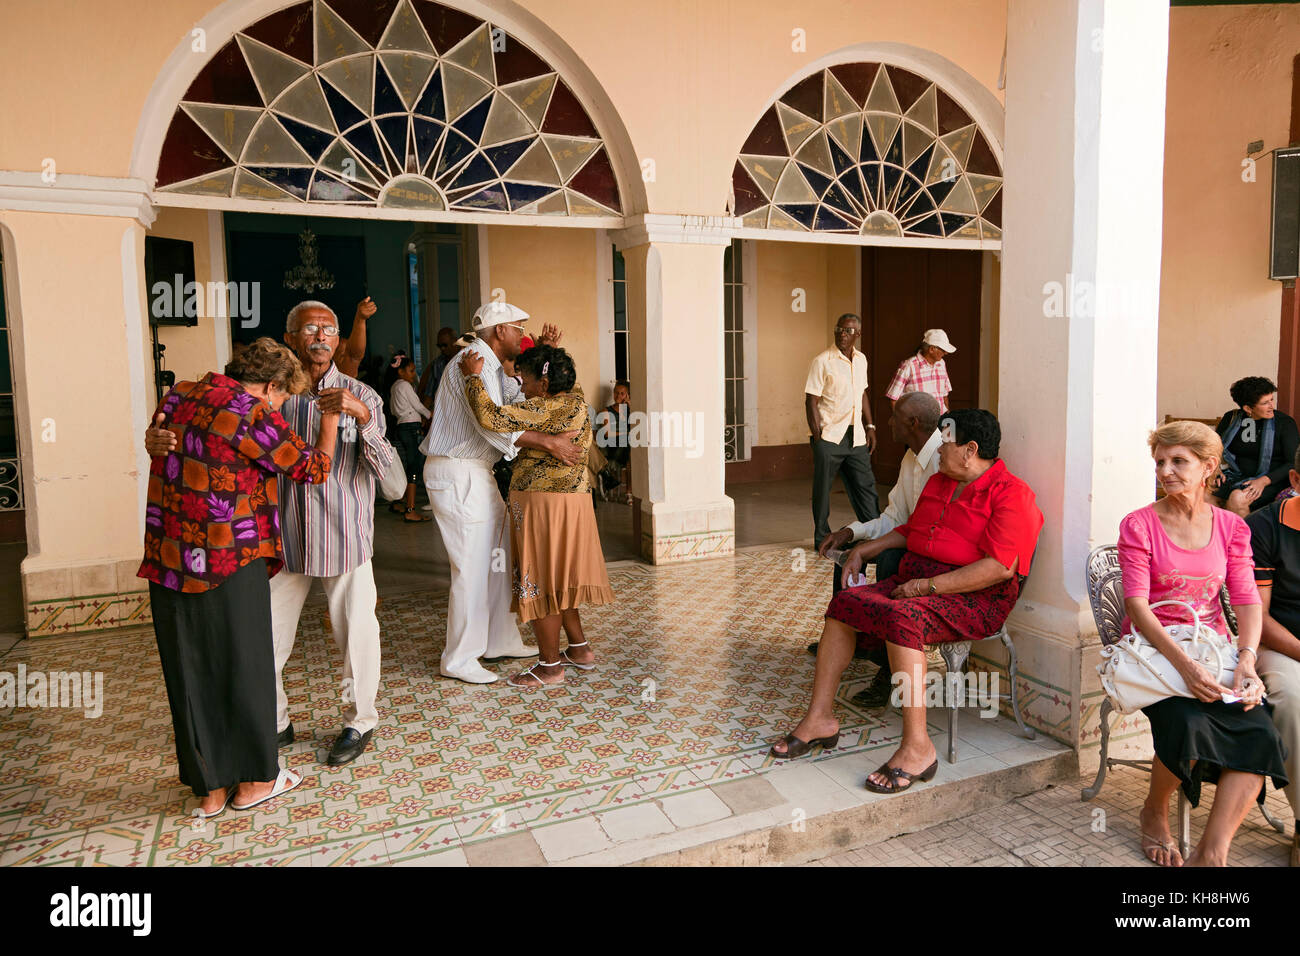 Seniorentanz in Trinidad, Provinz Sancti Spiritus, Kuba Engl.: Cuba, Sancti Spiritus province, Trinidad, senior citizen, dancing Stock Photo